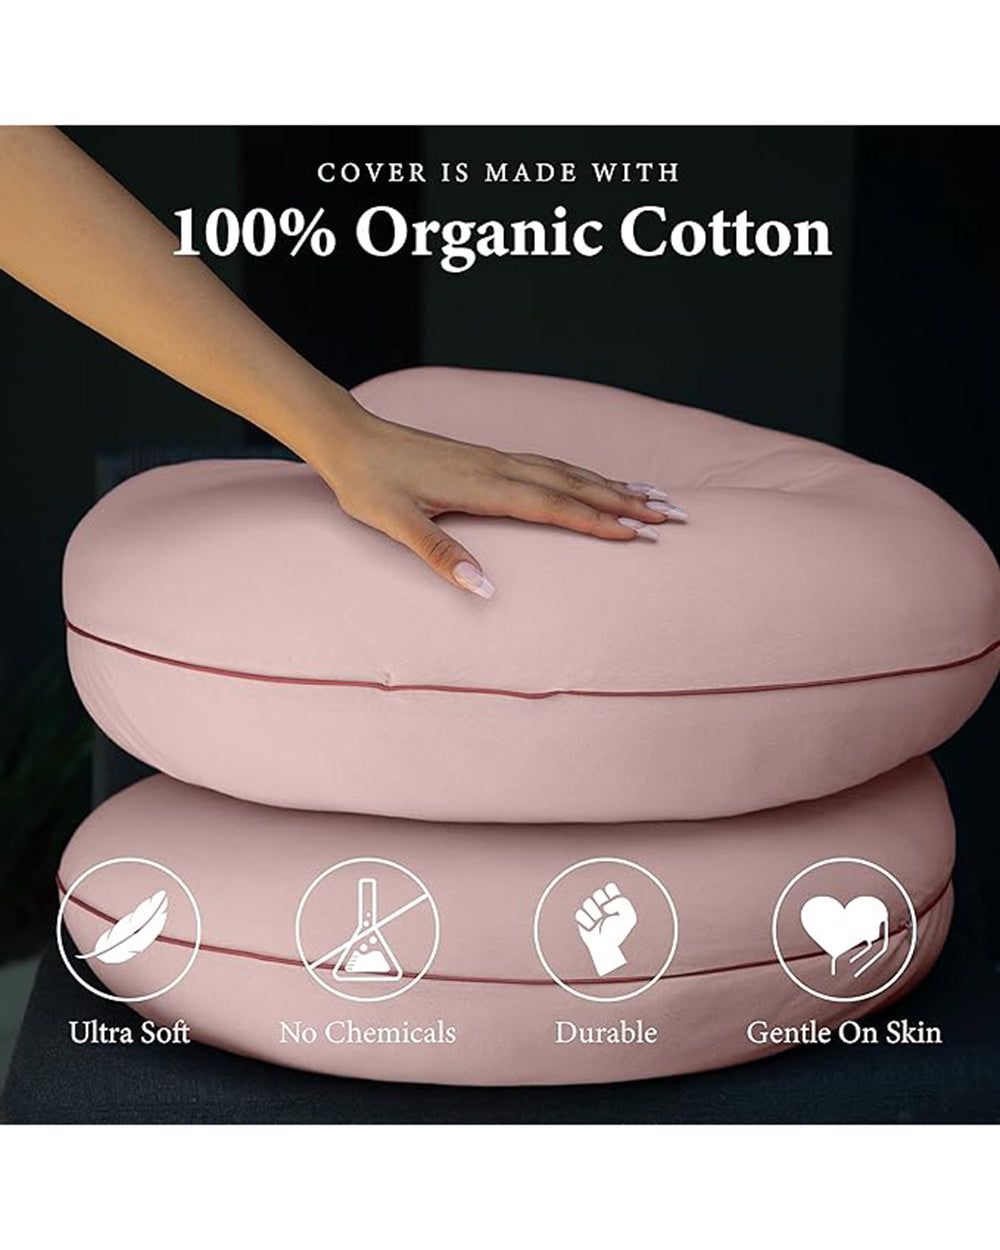 PharMeDoc Full Body C Shaped Maternity Pillow Pink